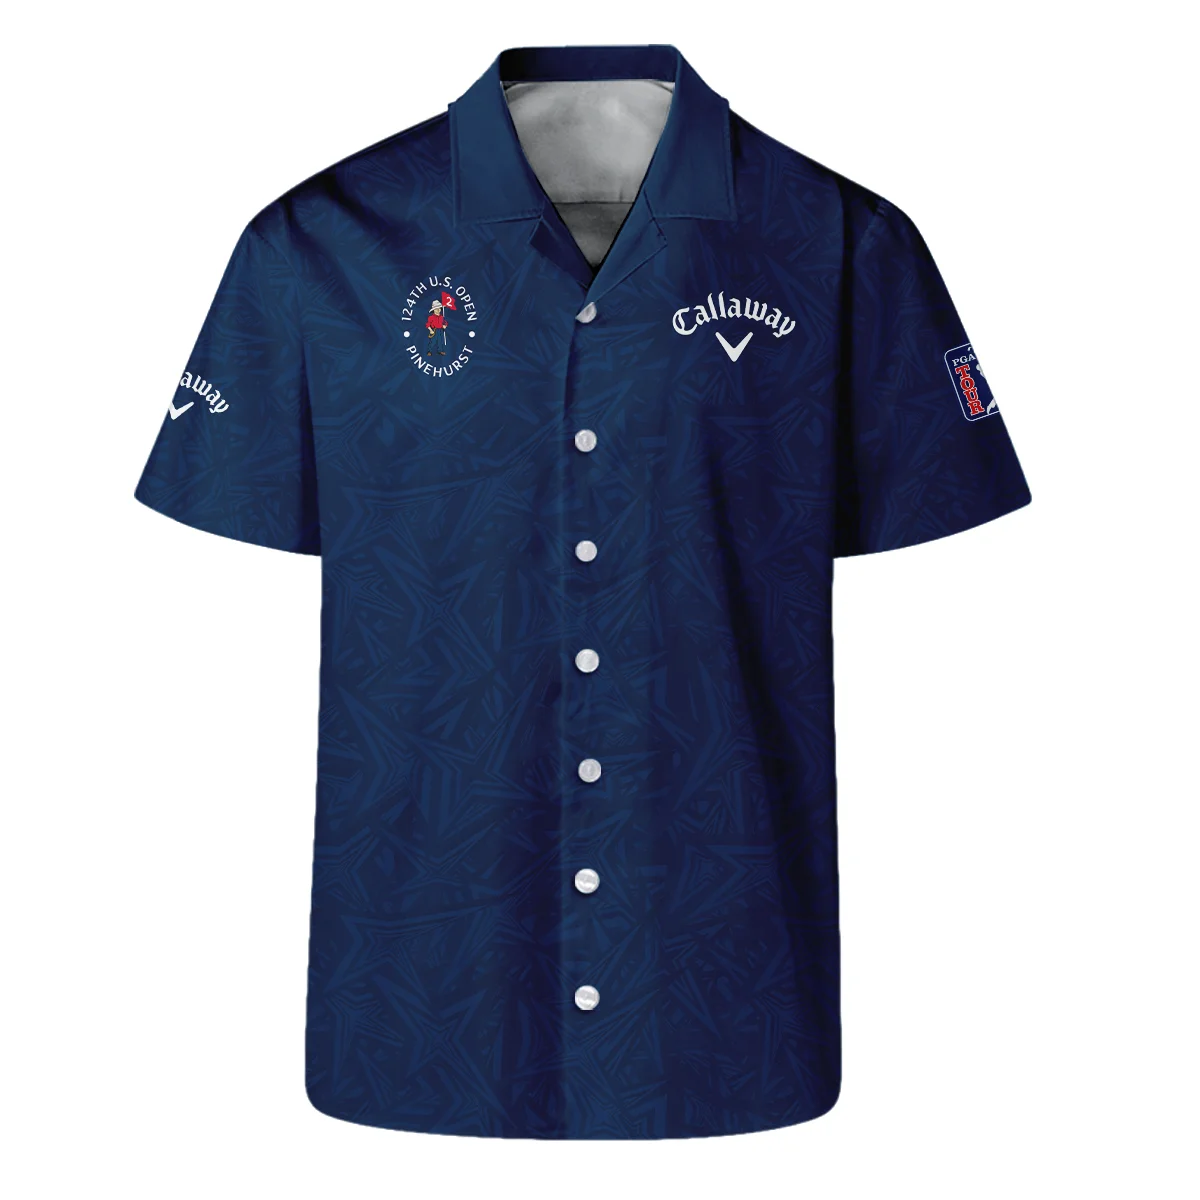 Callaway 124th U.S. Open Pinehurst Stars Gradient Pattern Dark Blue Sleeveless Jacket Style Classic Sleeveless Jacket